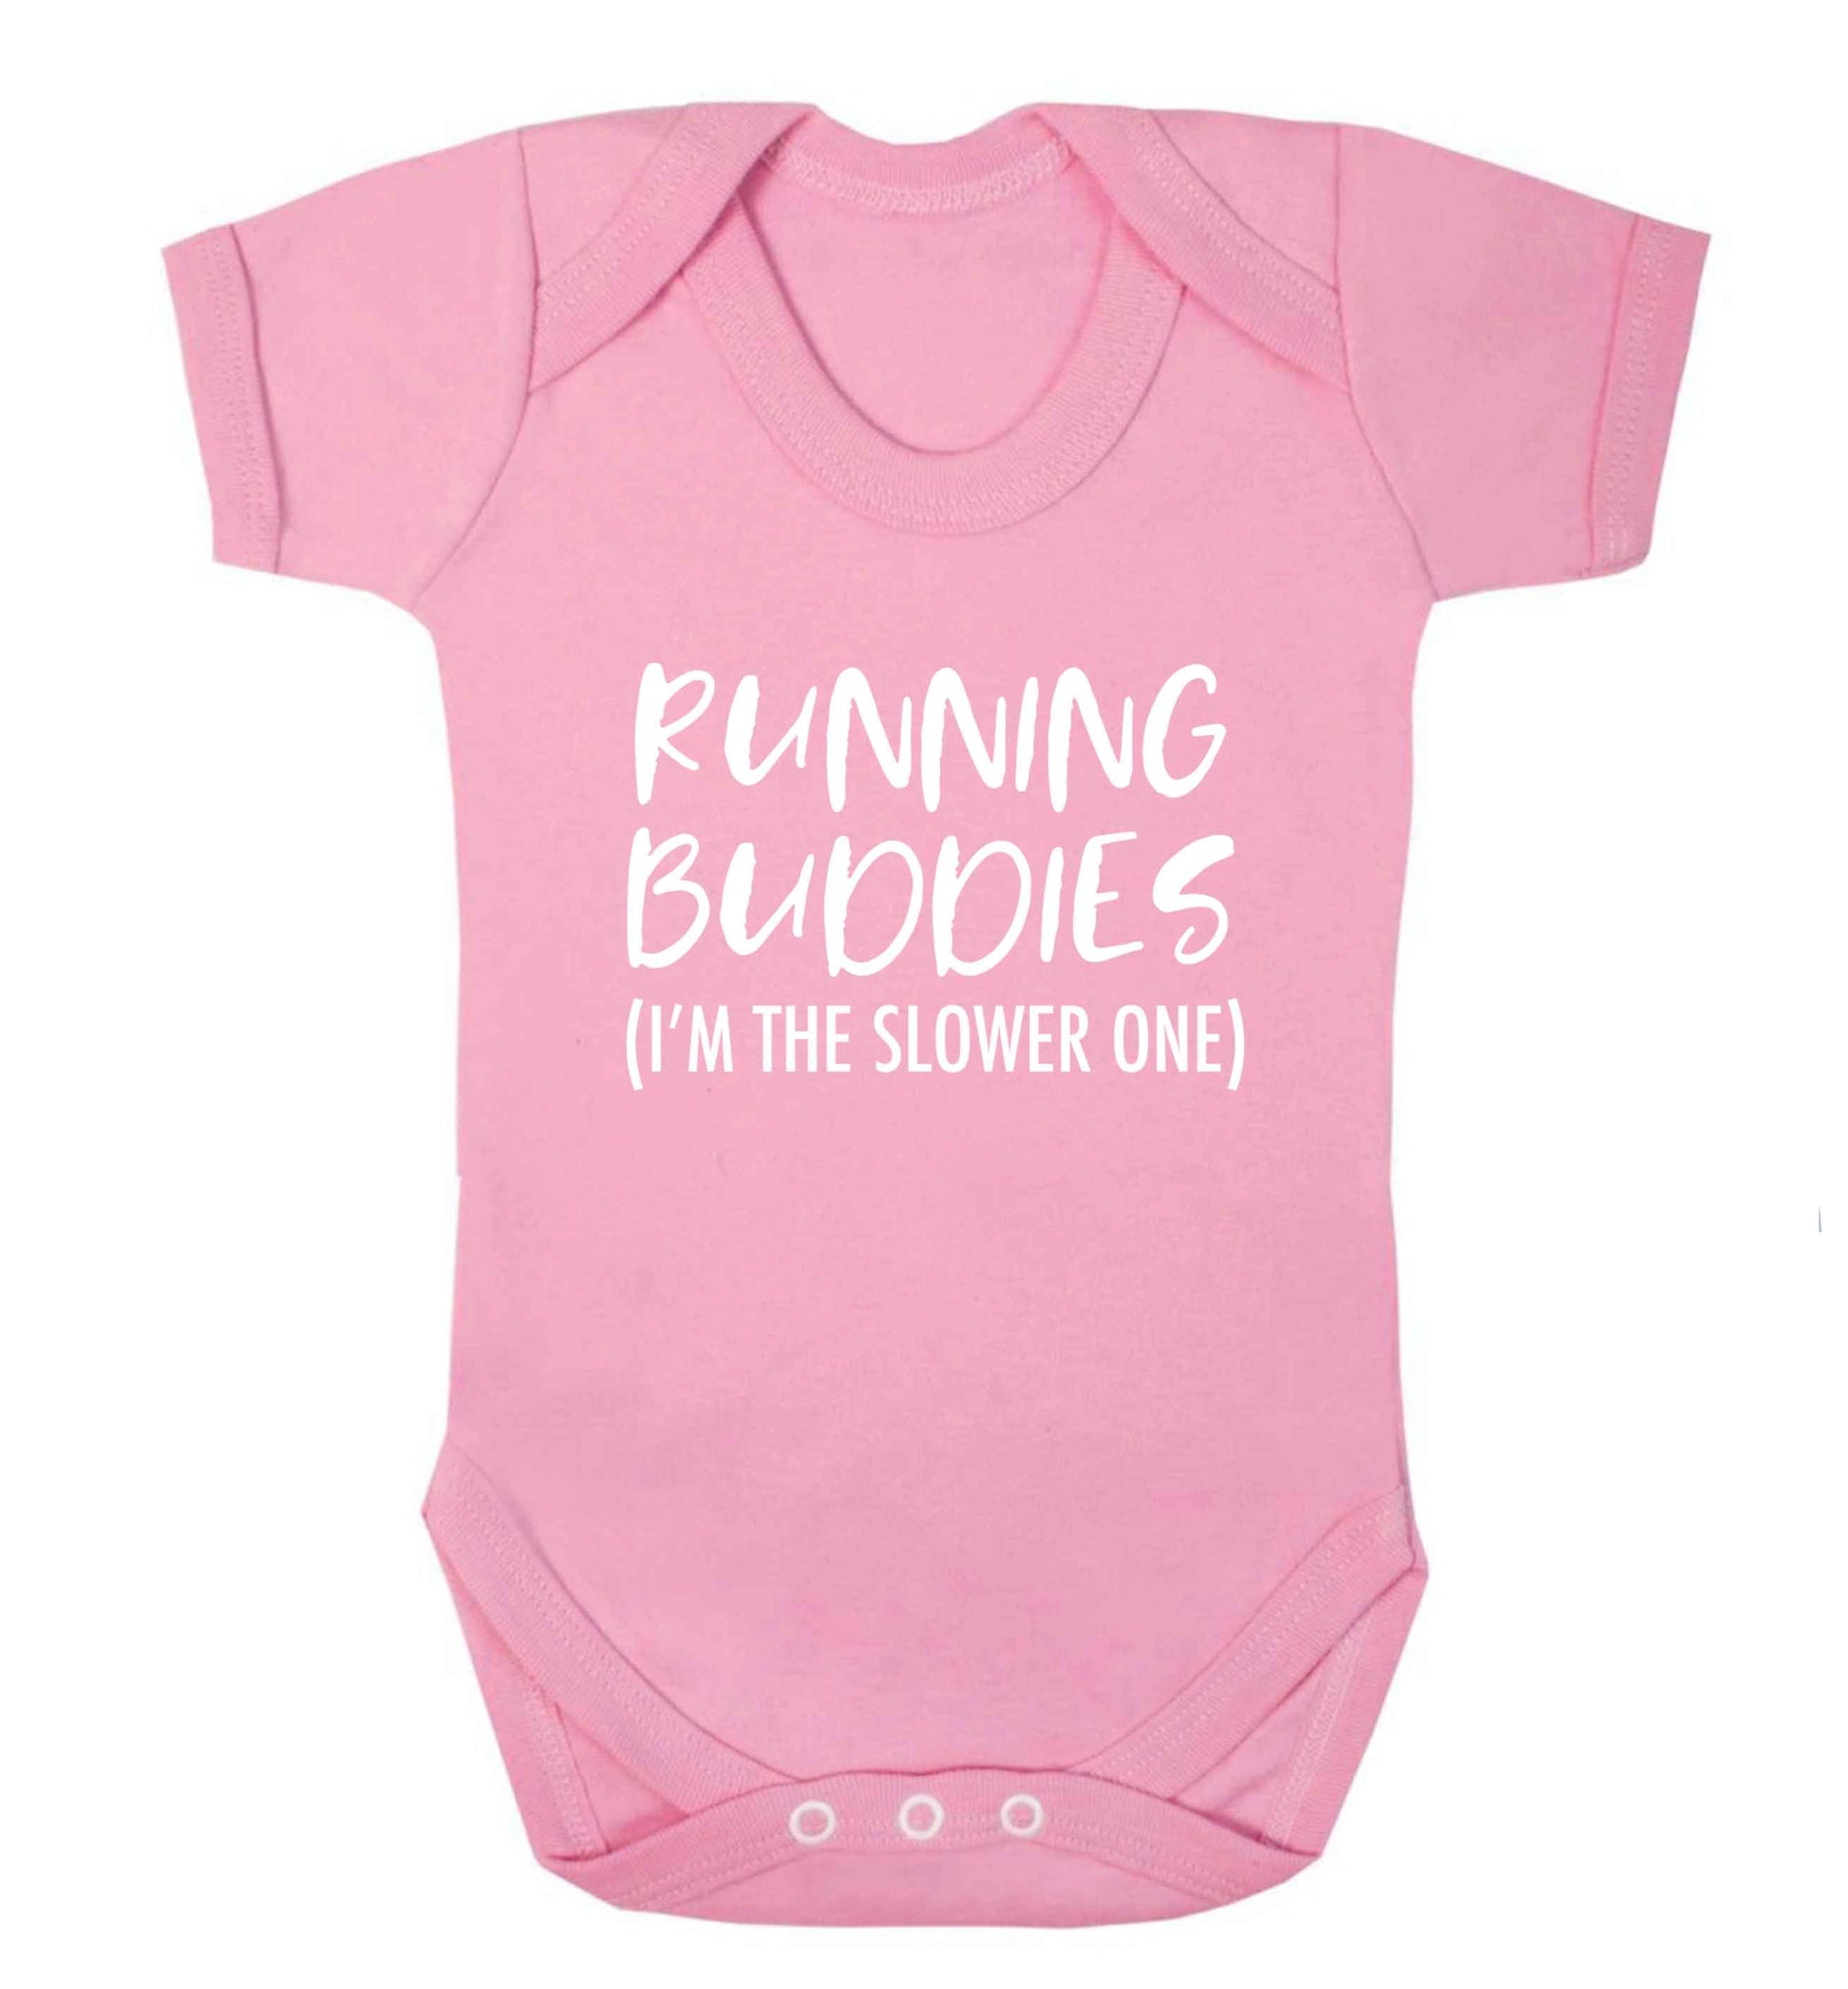 Running buddies (I'm the slower one) baby vest pale pink 18-24 months